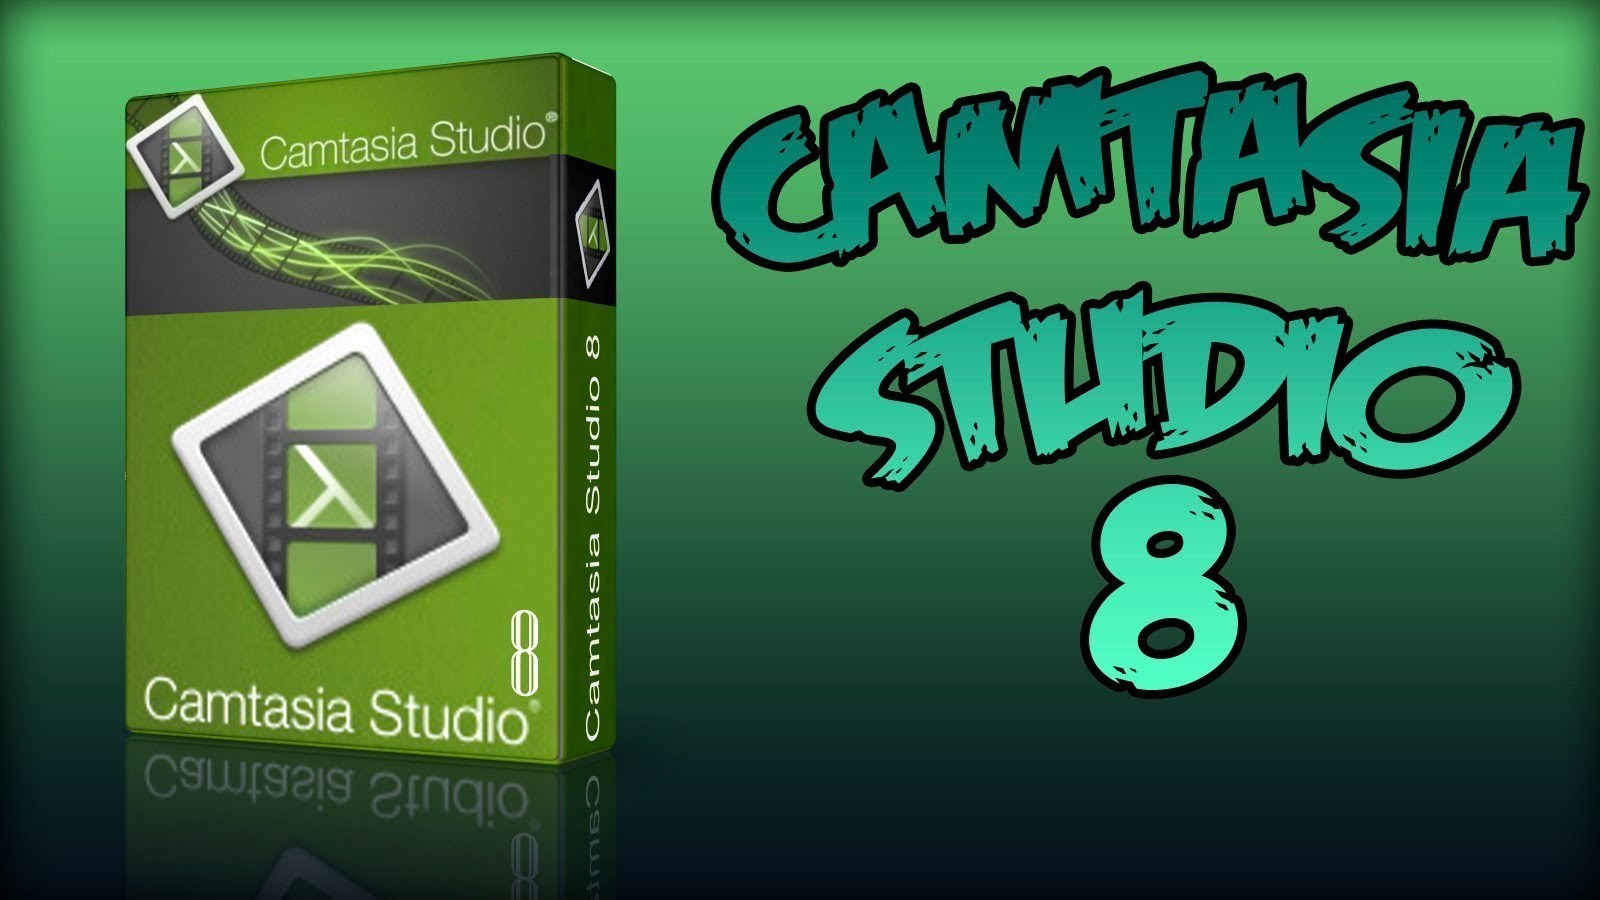 camtasia studio 8 serial key 2017